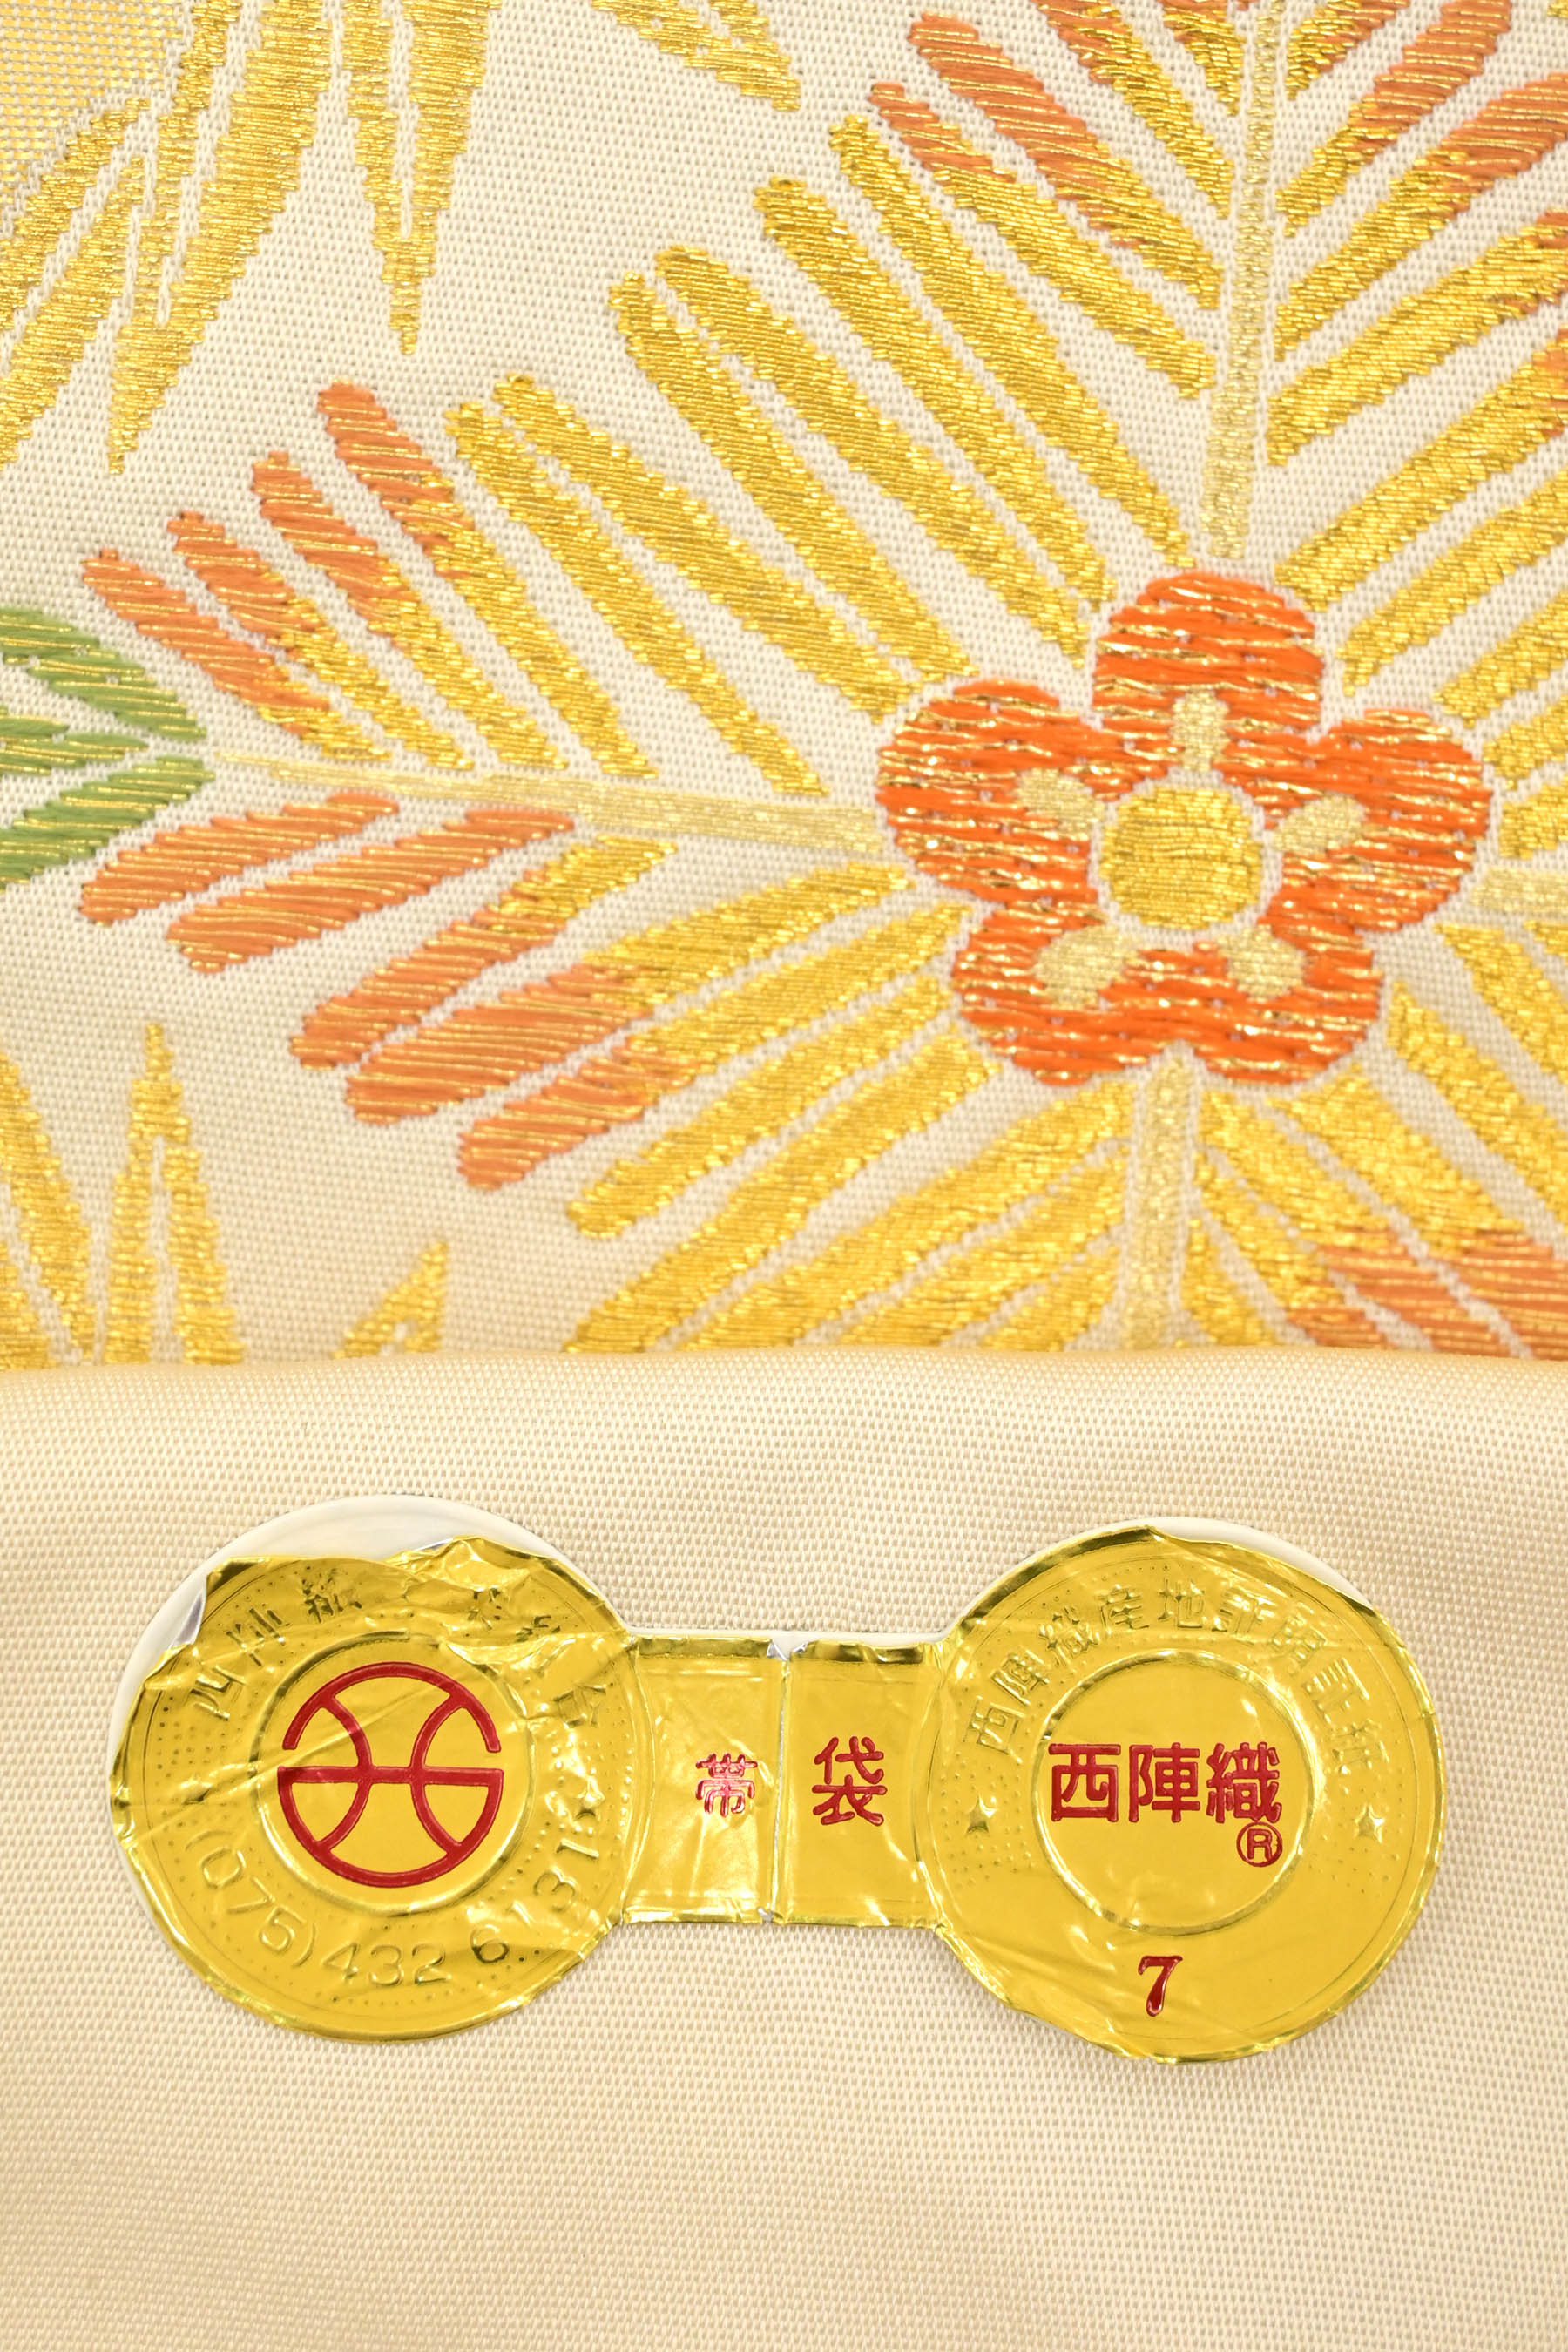 C717京都北尾織物匠豪華西陣正絹帯刺繍サンプル材料壁掛祝い熨斗純金箔帯素材/材料